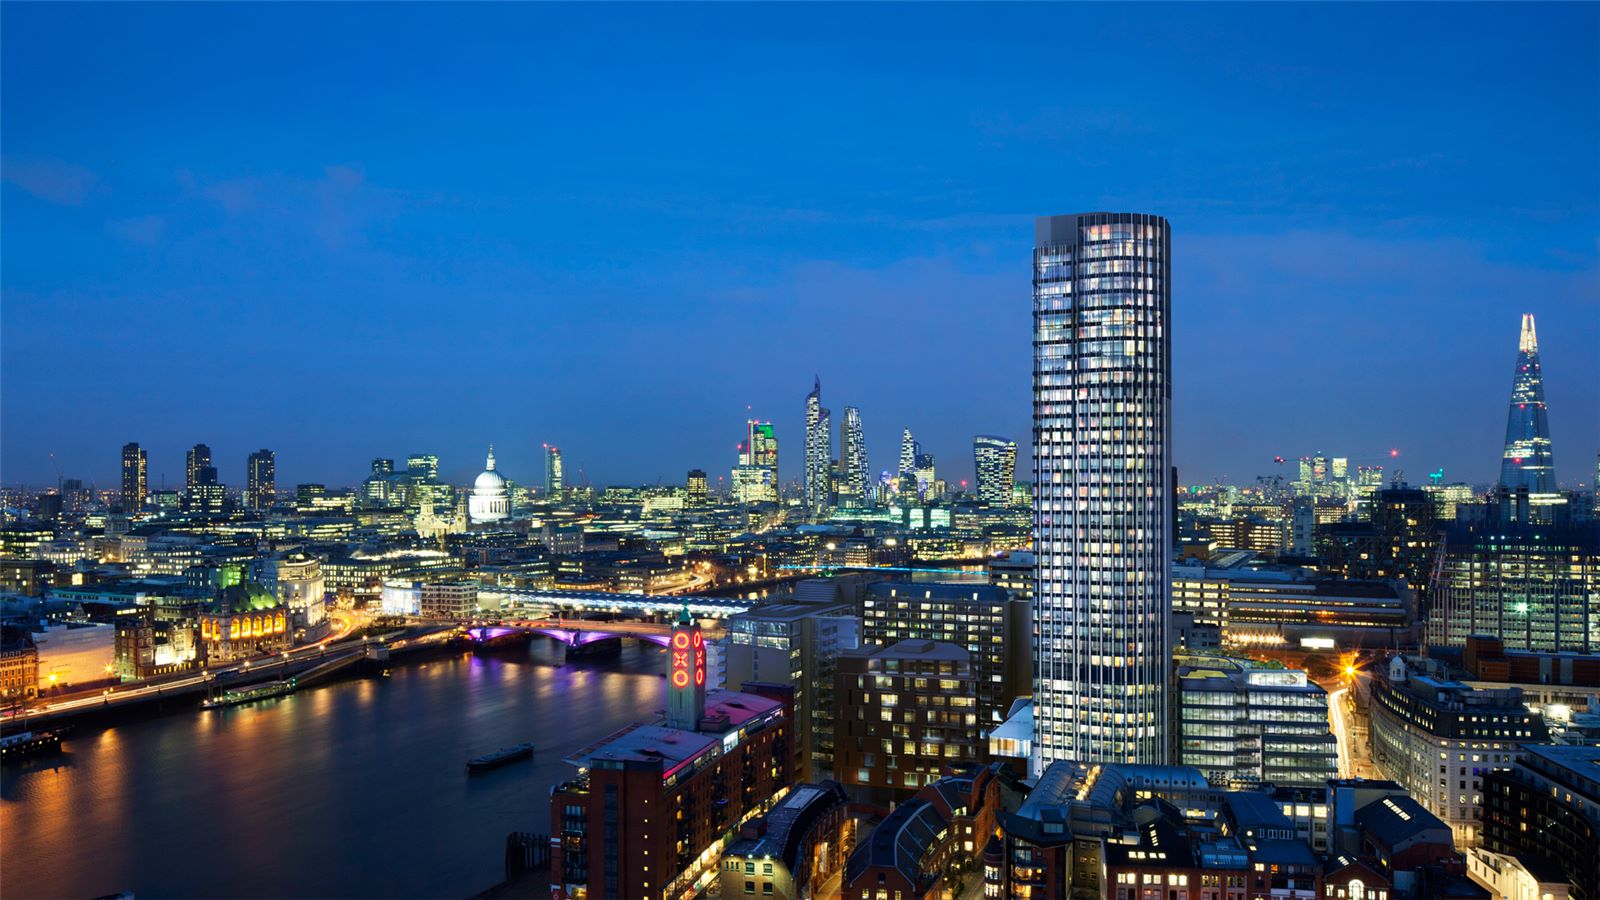 London Southbank Tower, Night View - Mace Group